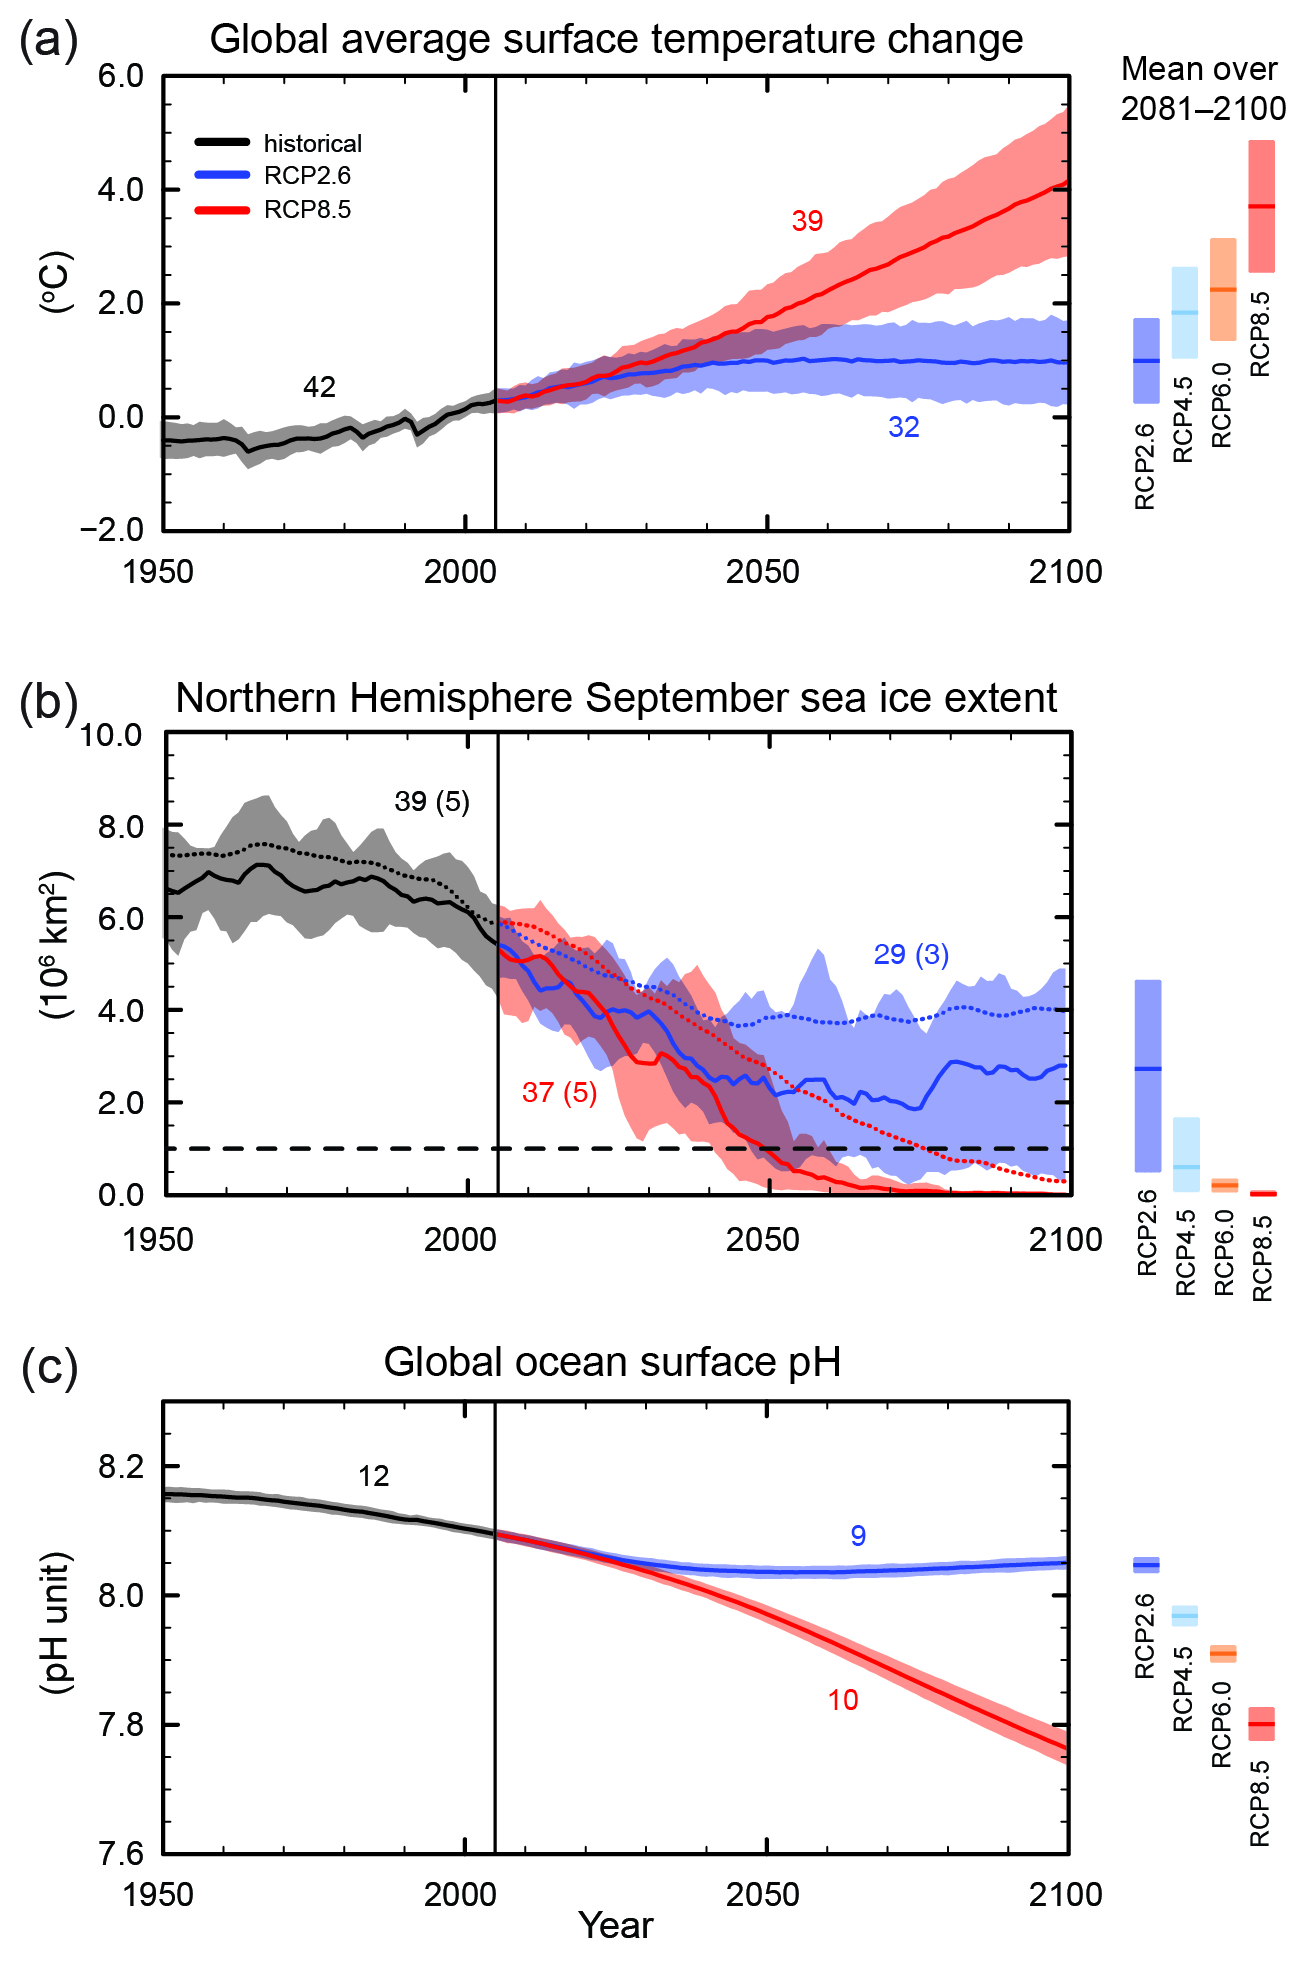 (1) Global annual avareage surface temperature (2) Northern Hemisphere September sea ice extent (3) Global average ocean surface pH